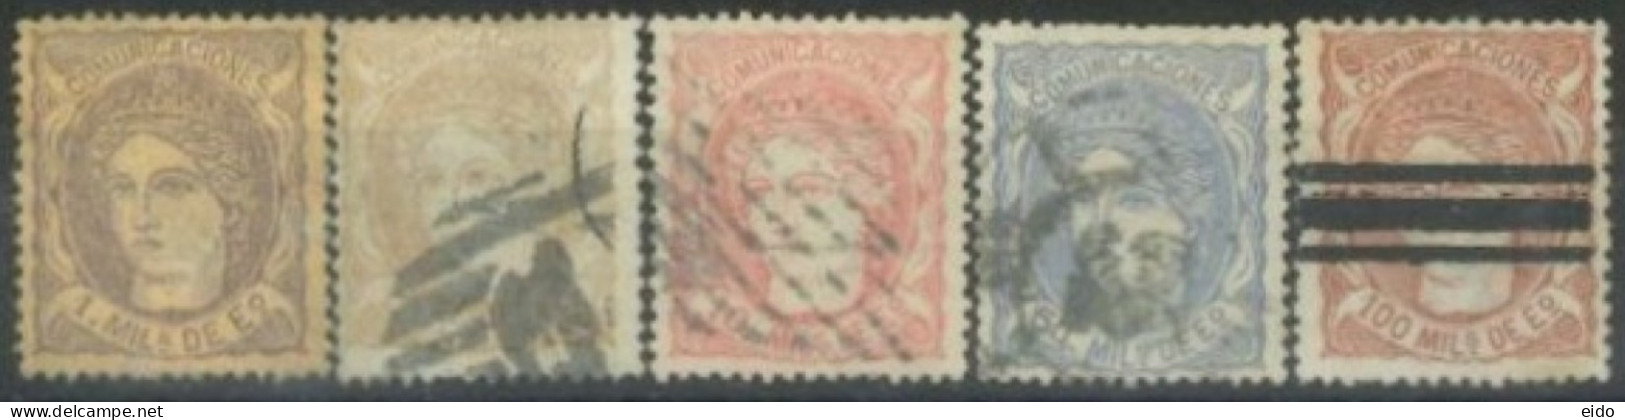 SPAIN,  1870 - ESPANA STAMPS SET OF 5, # 159, 163/64, & 166/67,USED. - Gebraucht